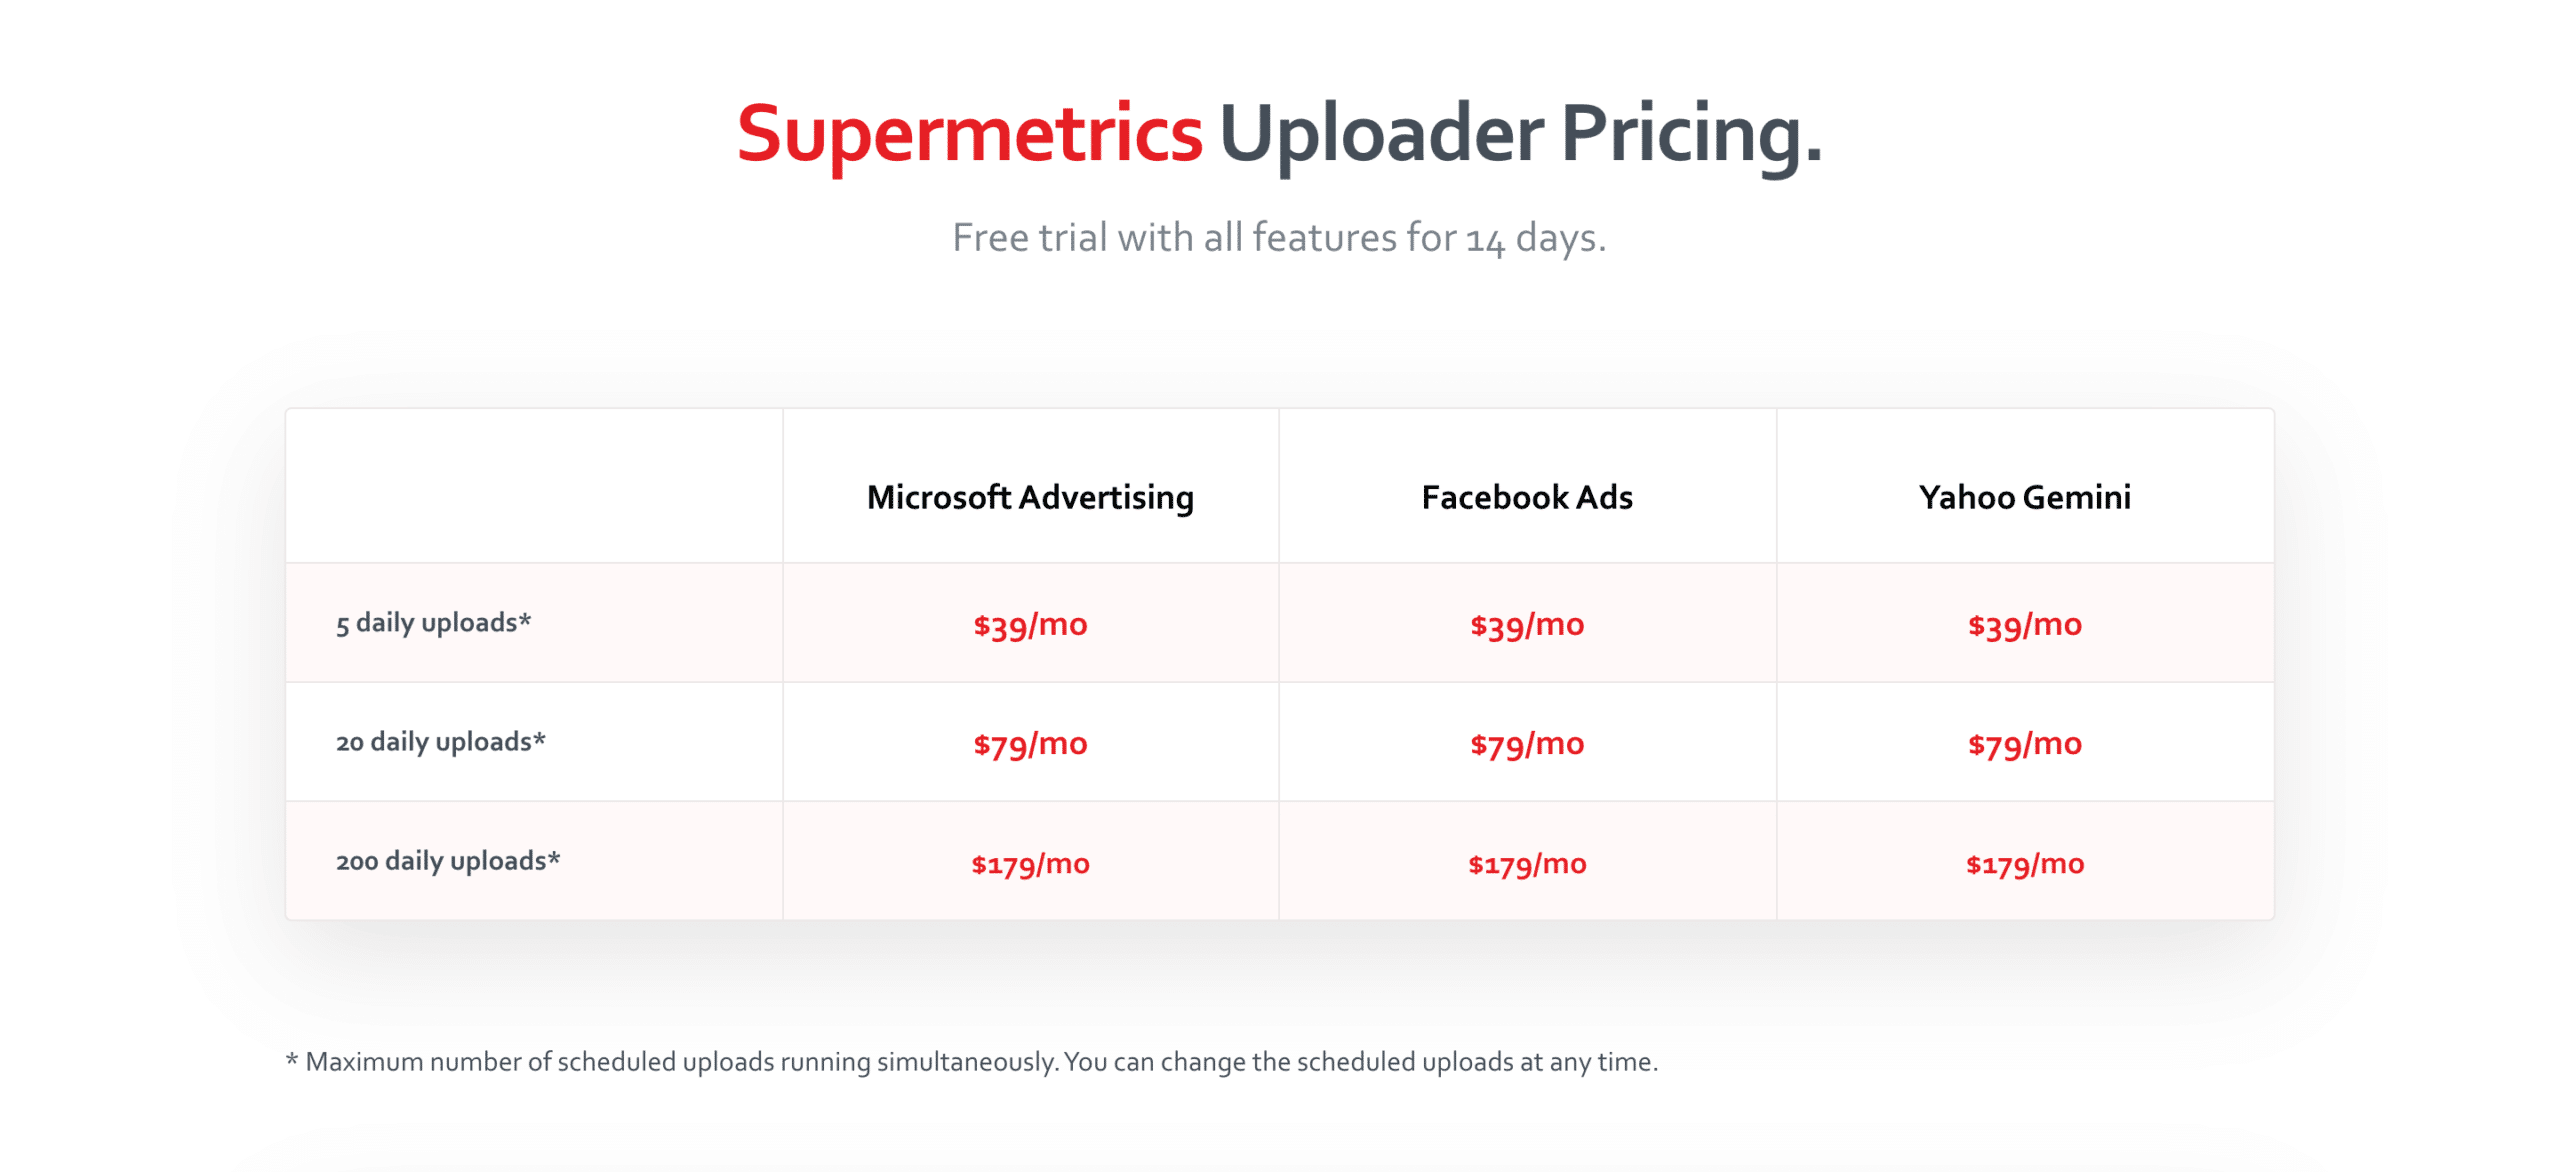 Supermetrics uploader pricing